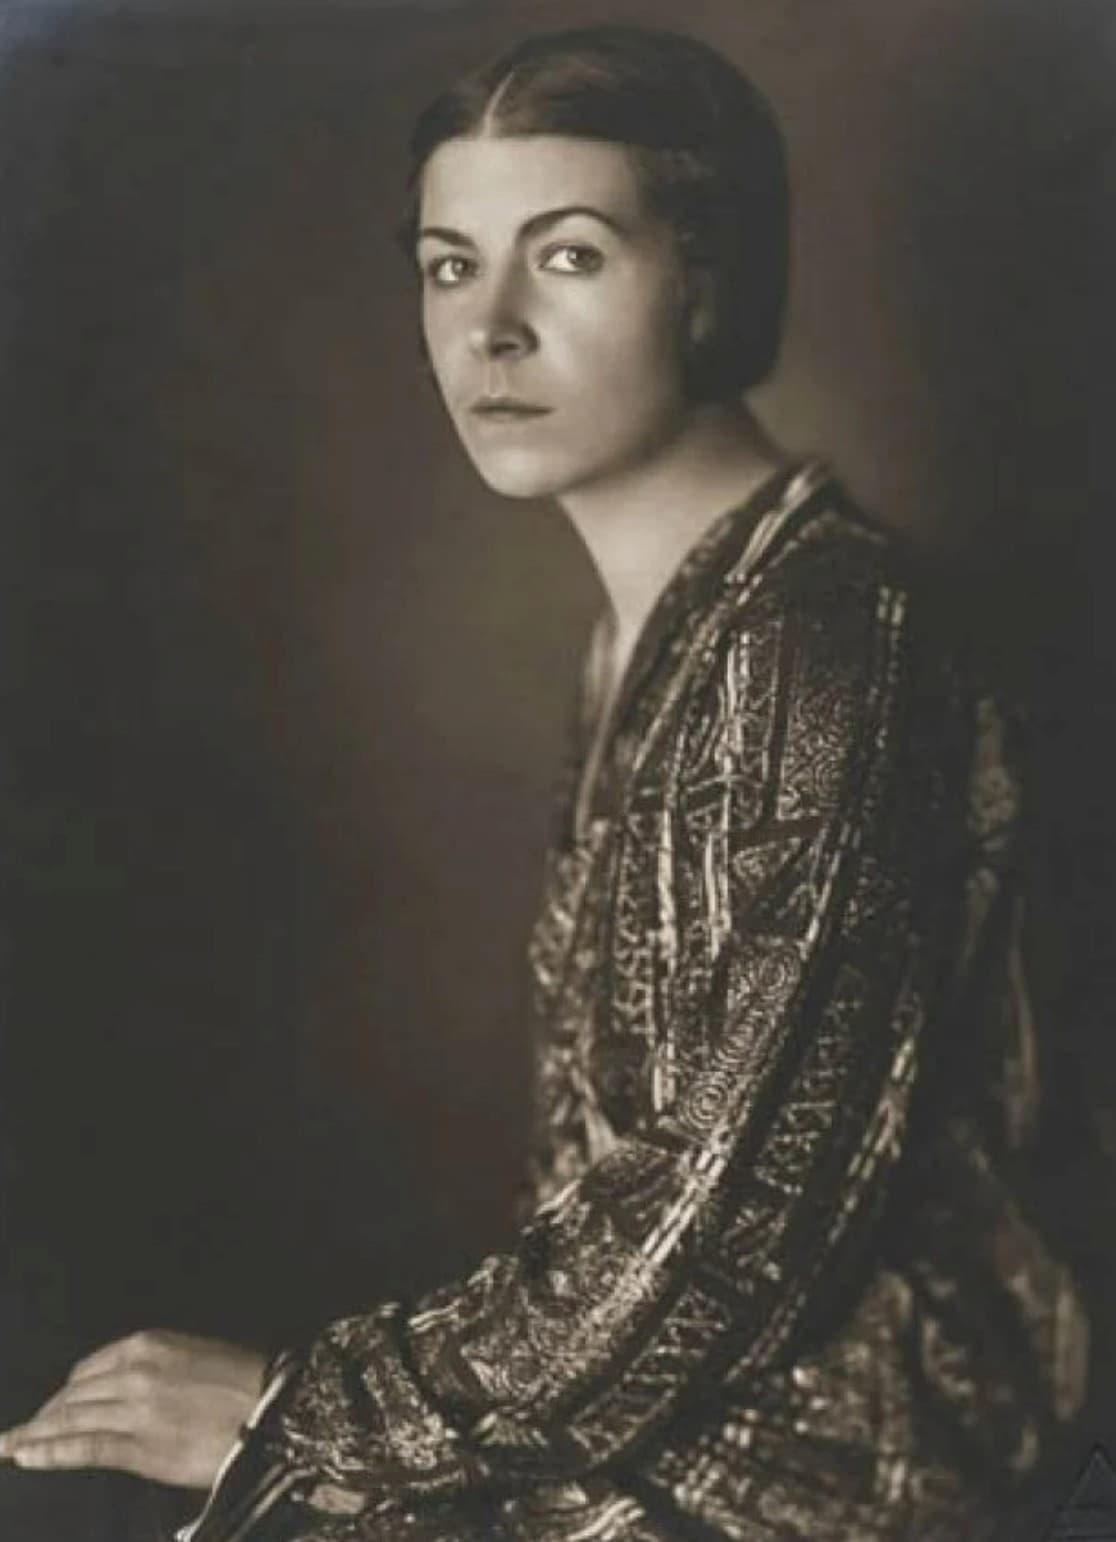 Olga Rudge